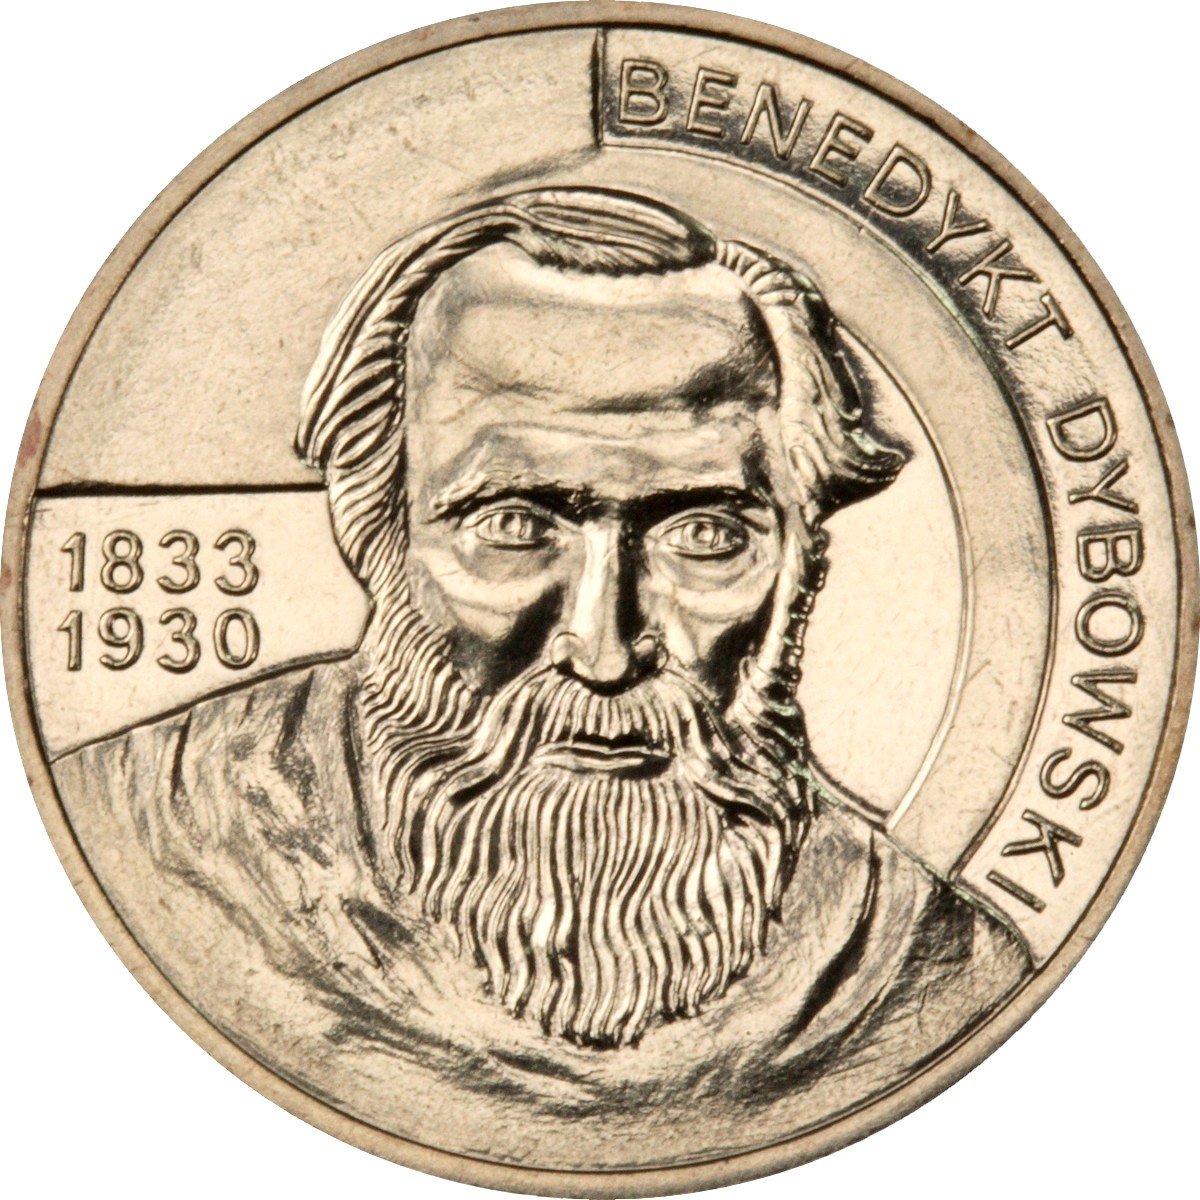 2zl-benedykt-dybowski-1833-1930-rewers-monety